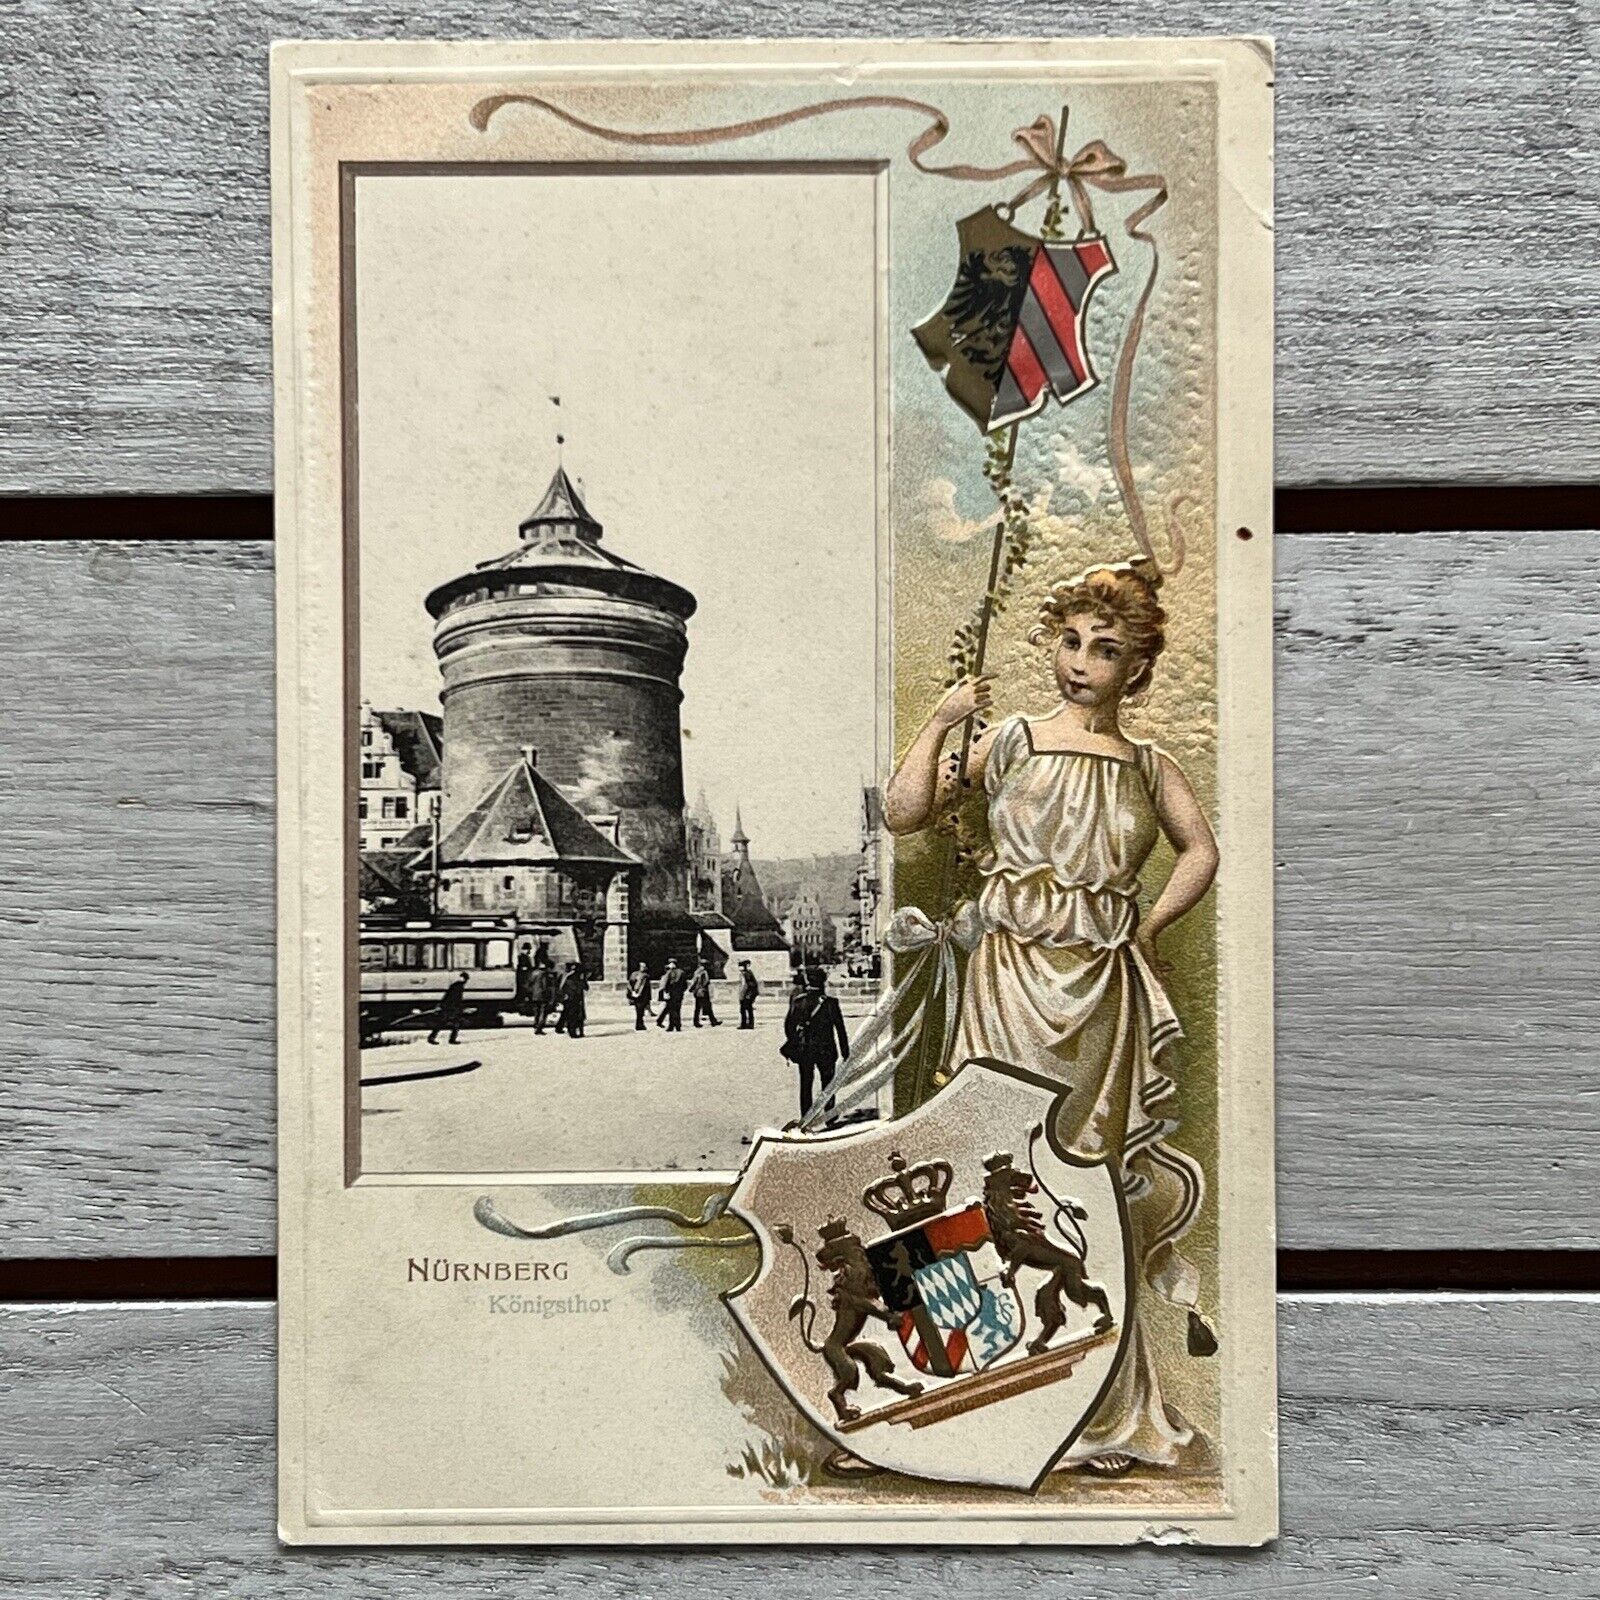 NURNBERG Nuremberg BAVARIA GERMANY Spittlertor Tower INSET IMAGE AntiquePostcard